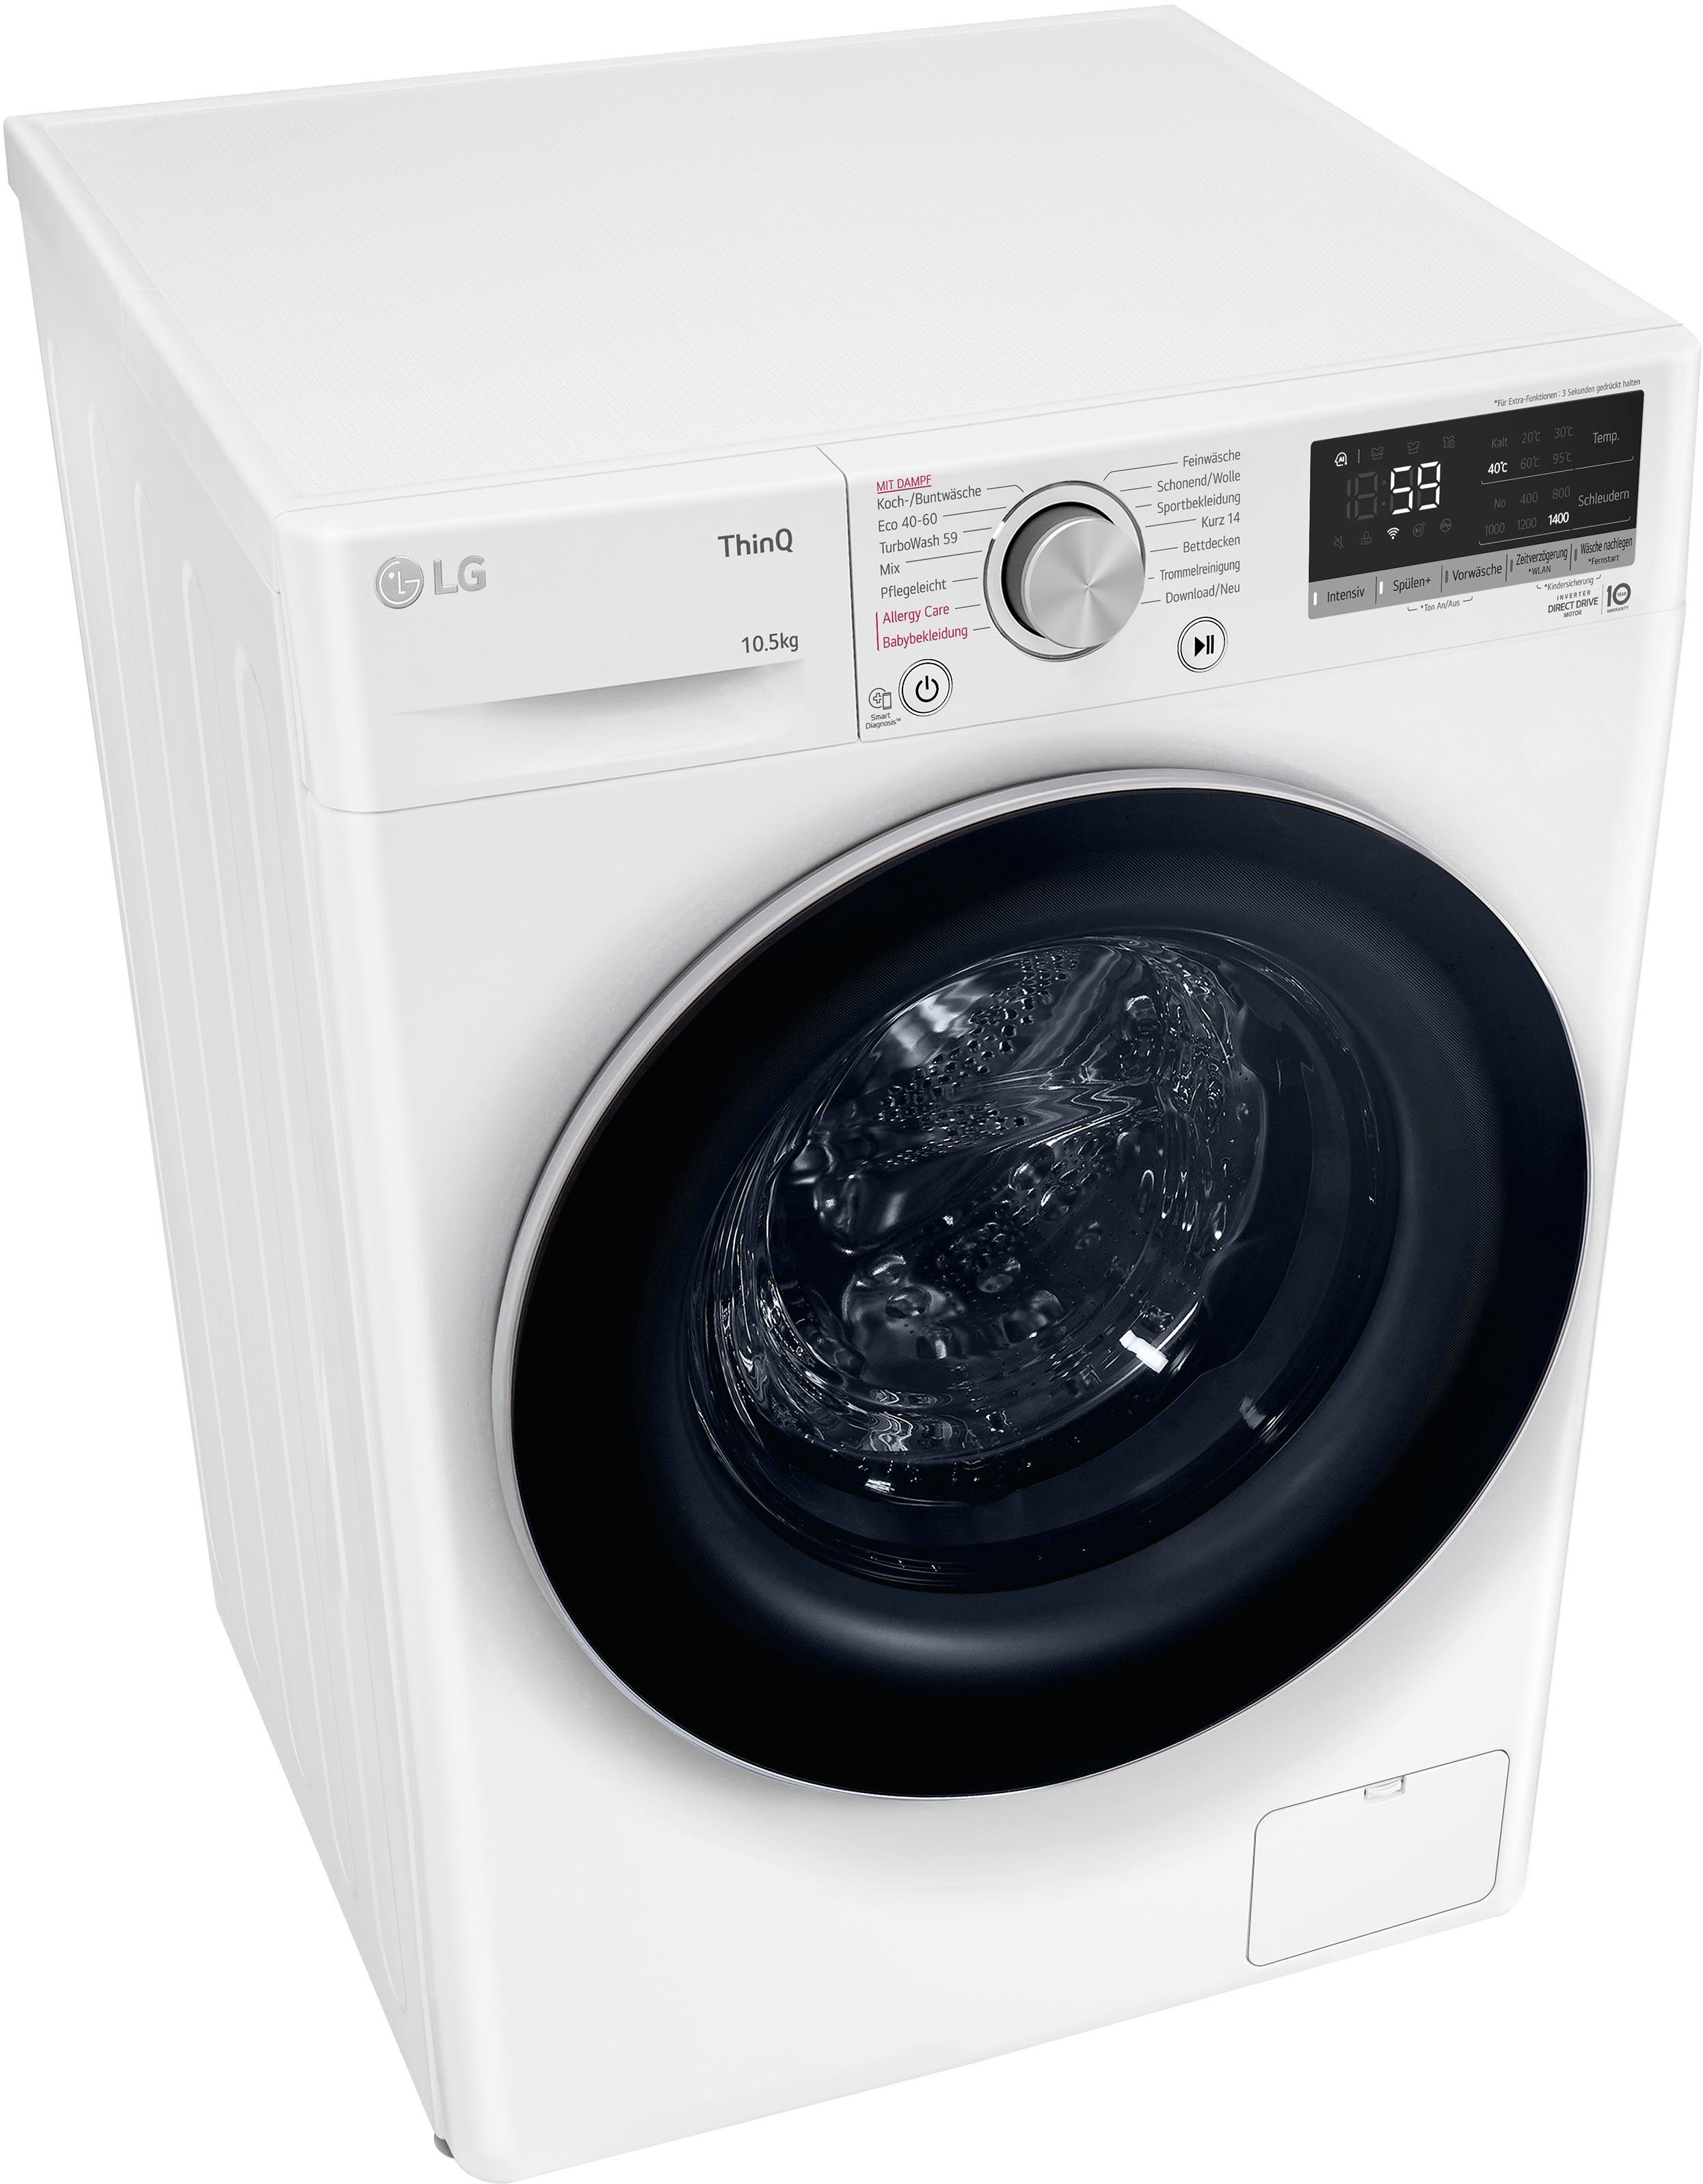 LG Waschmaschine F4WV70X1, 10,5 1400 kg, U/min